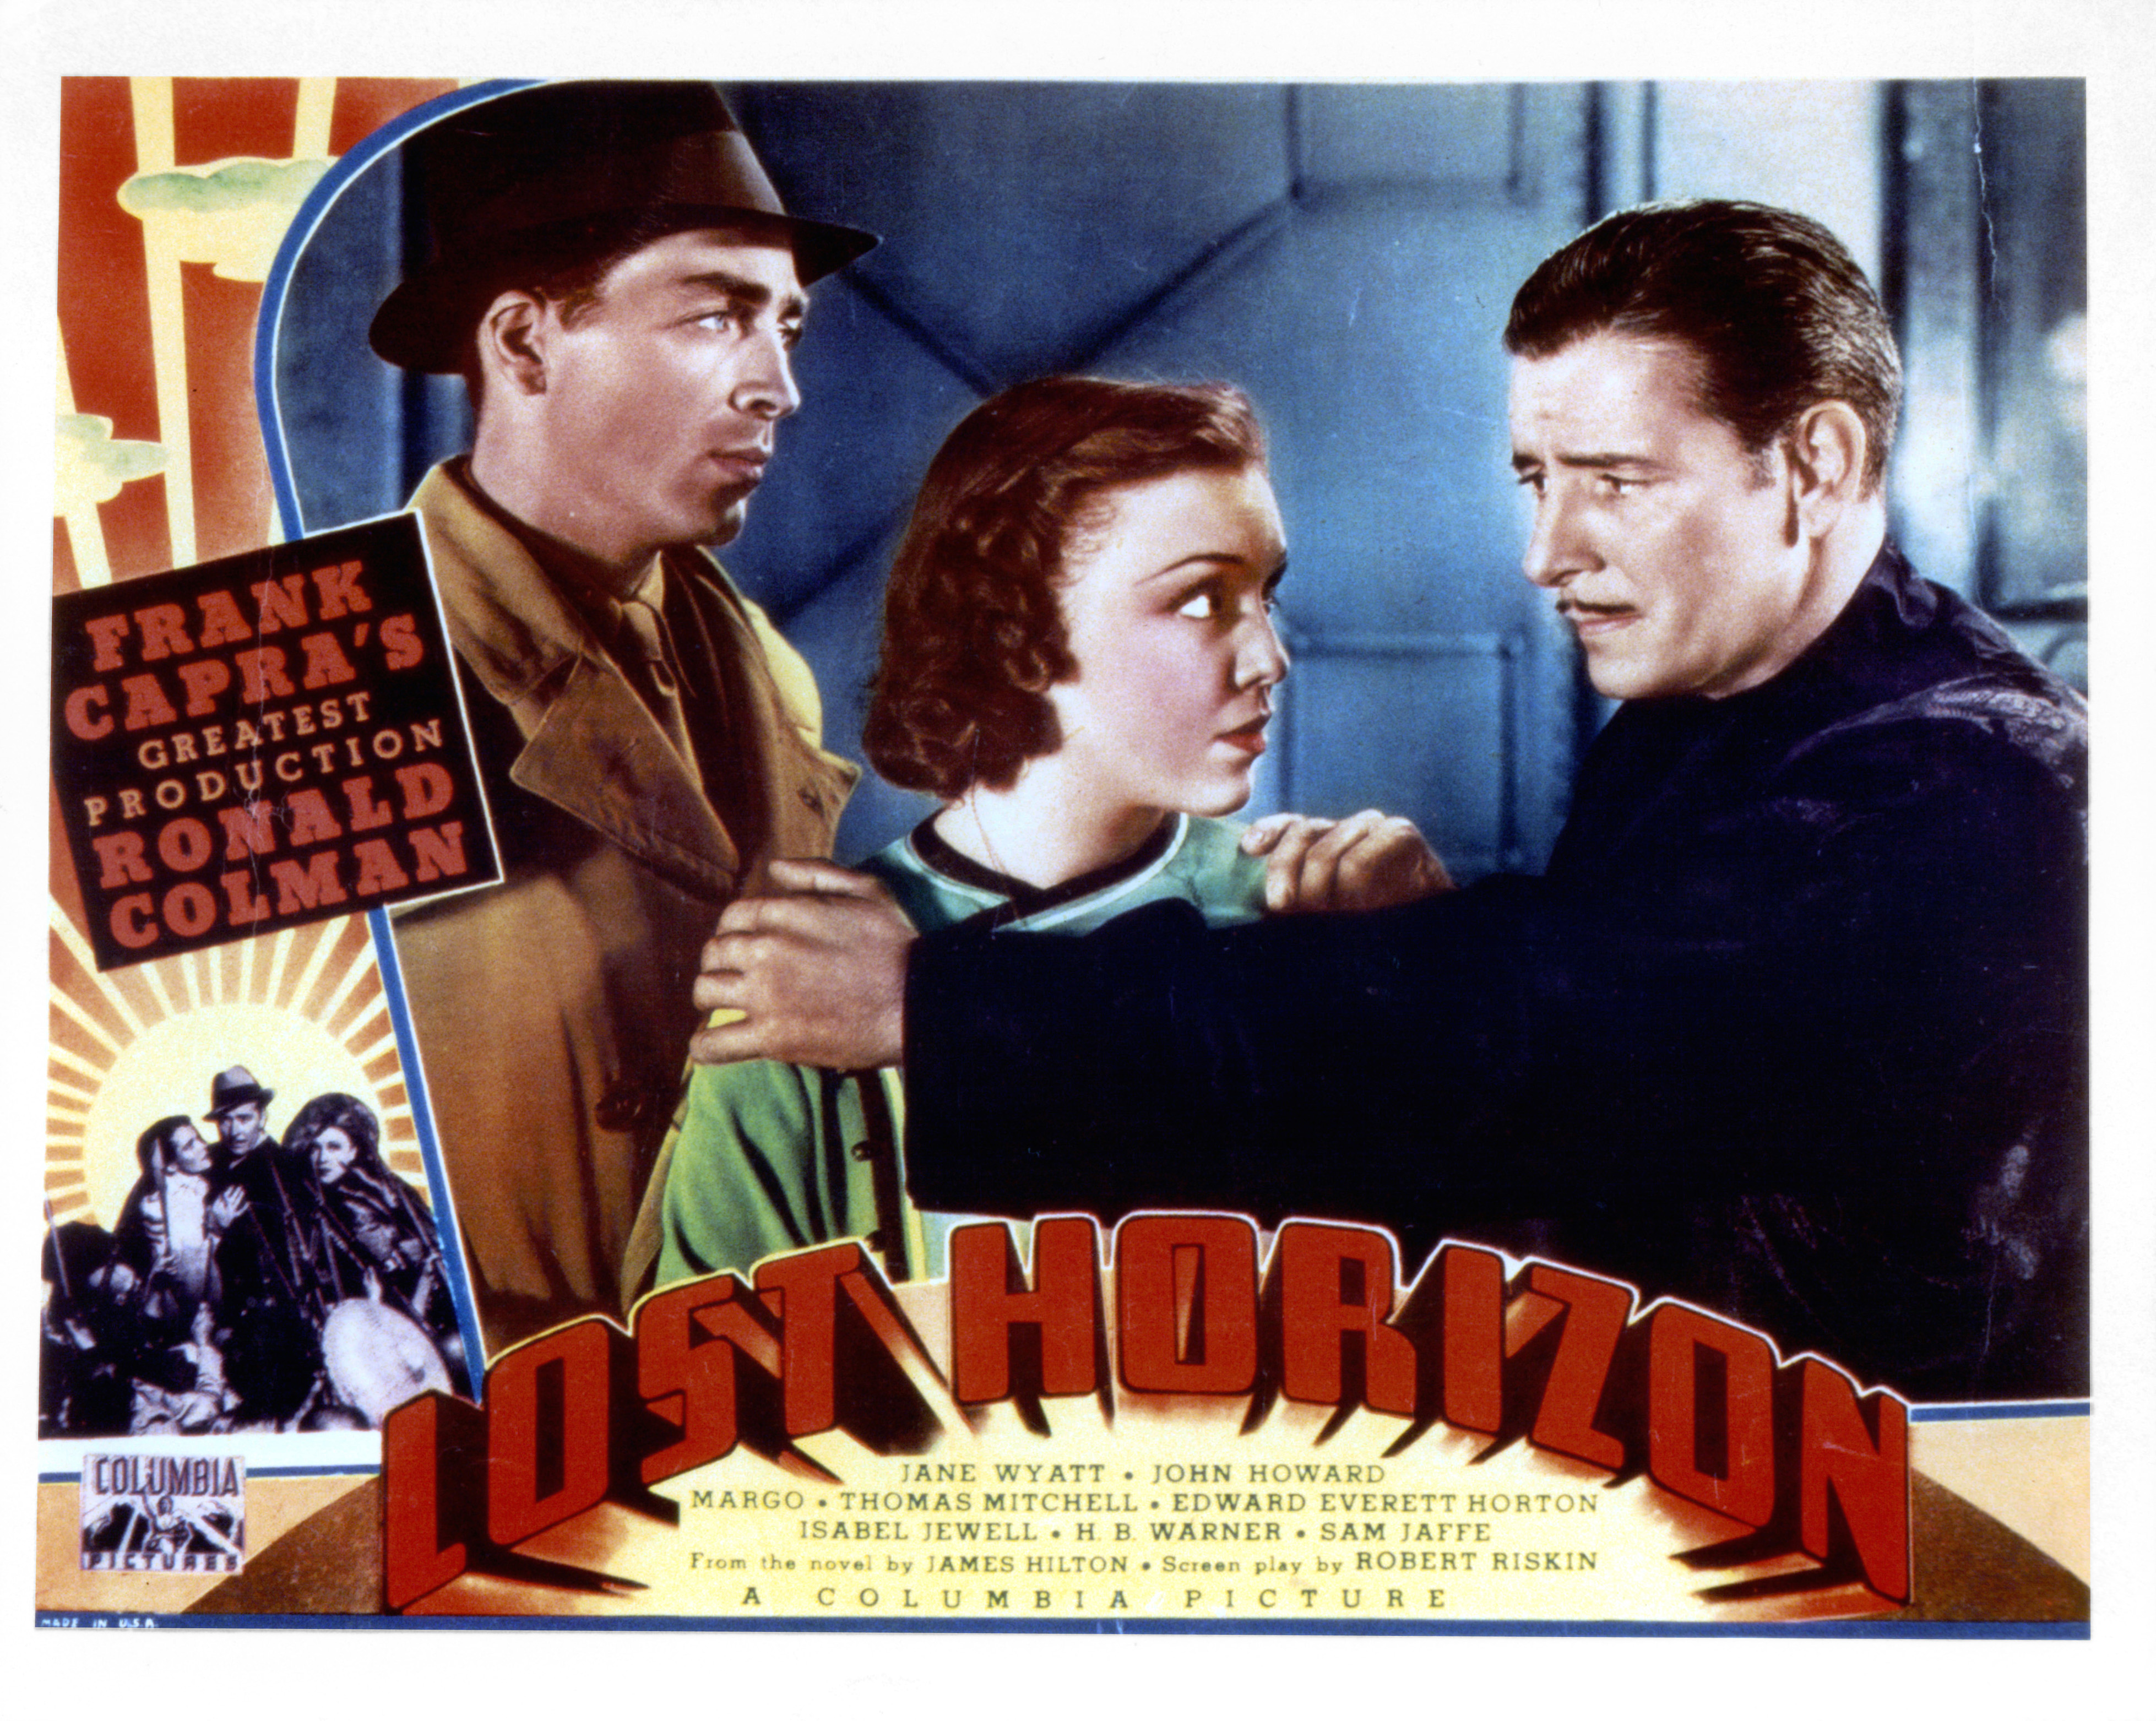 Ronald Colman, John Howard and Margo in Lost Horizon (1937)